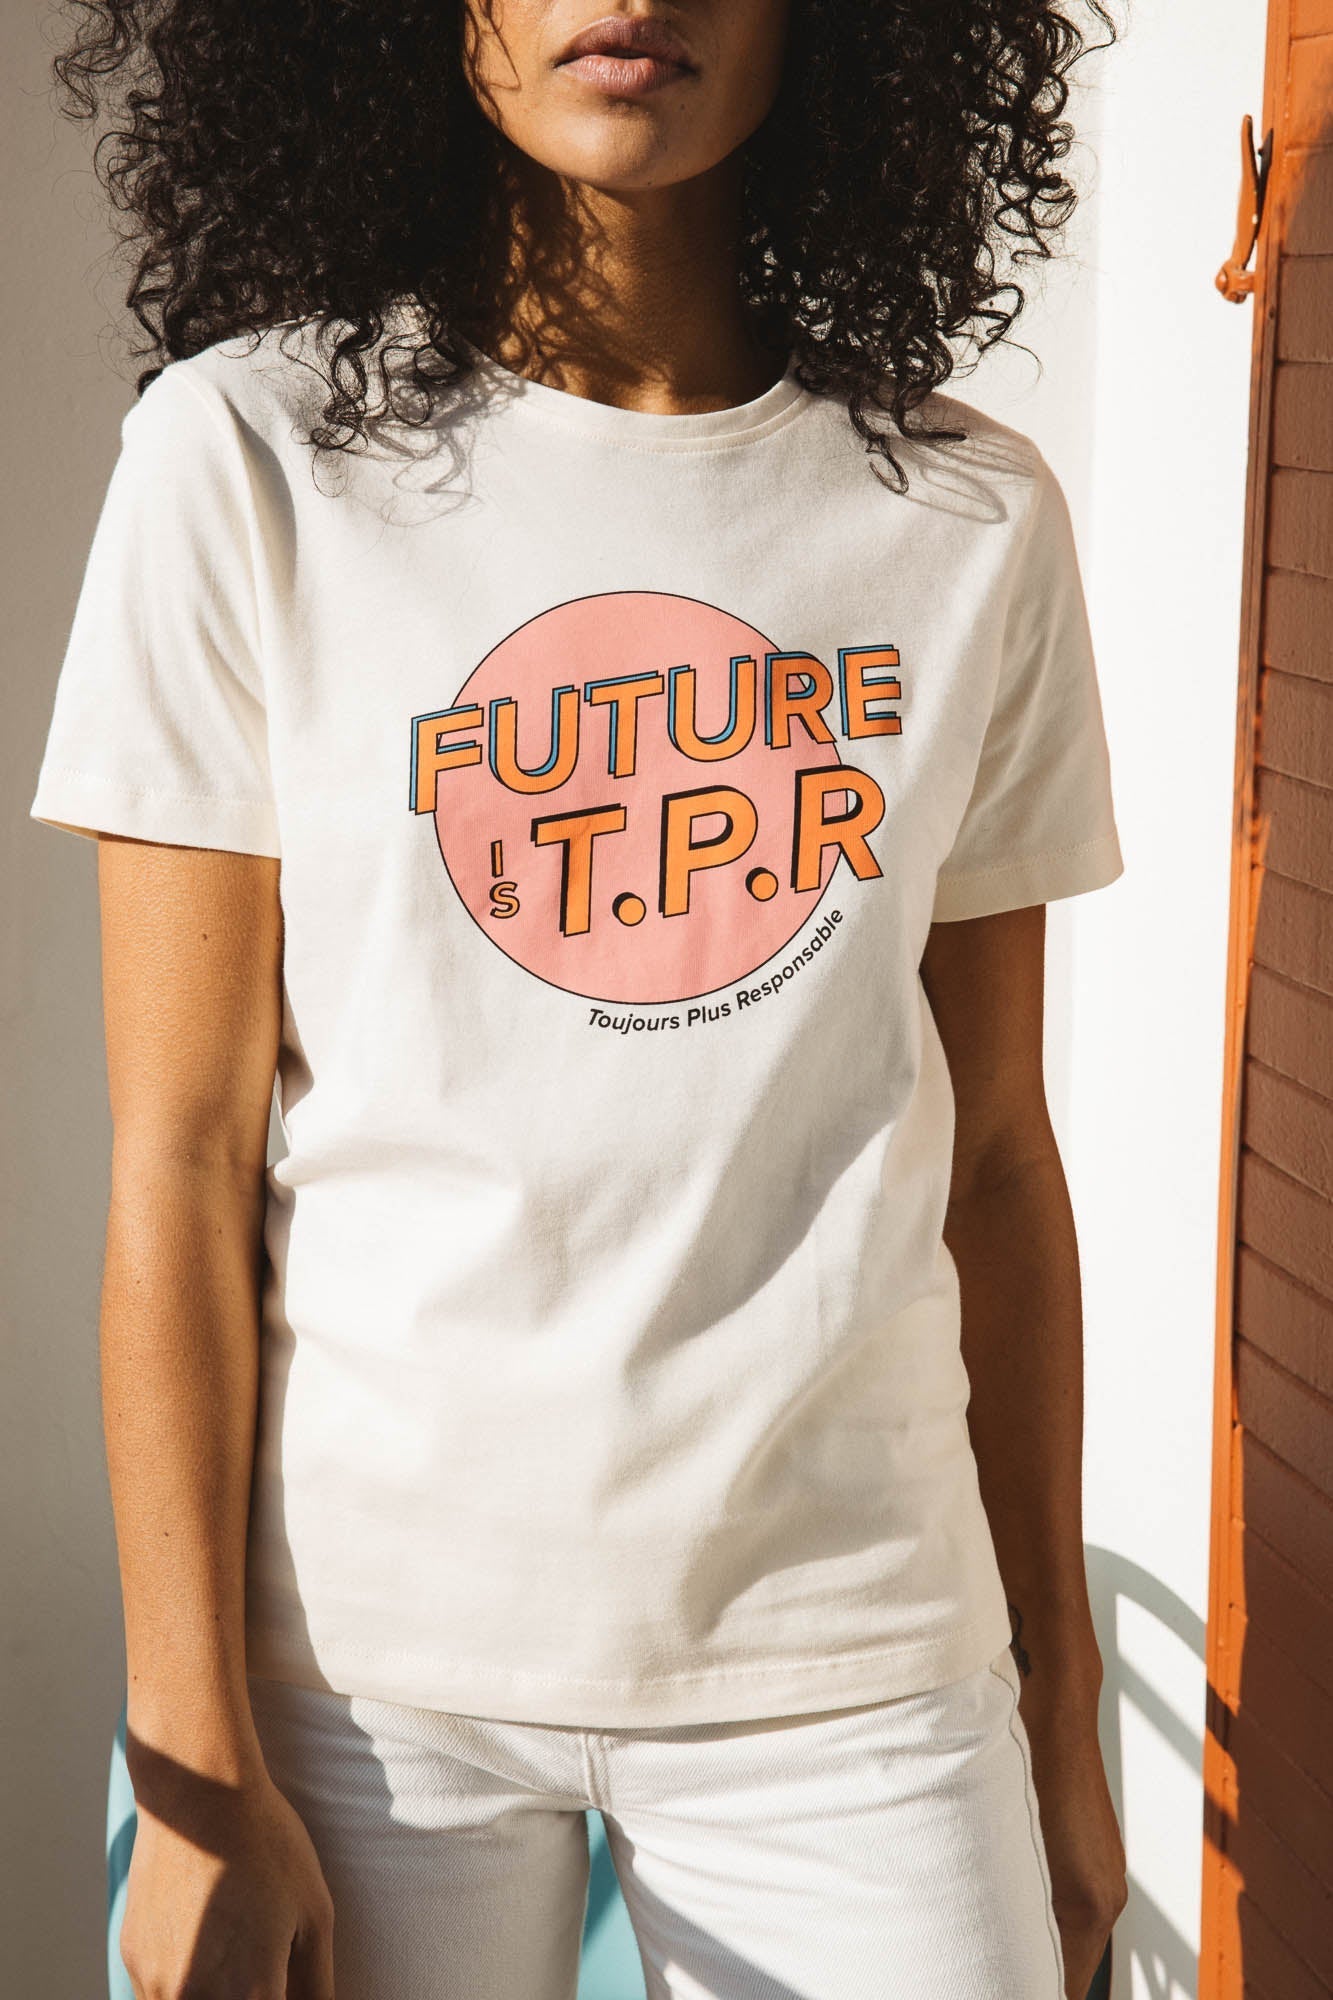 Future Is TPR t-shirt